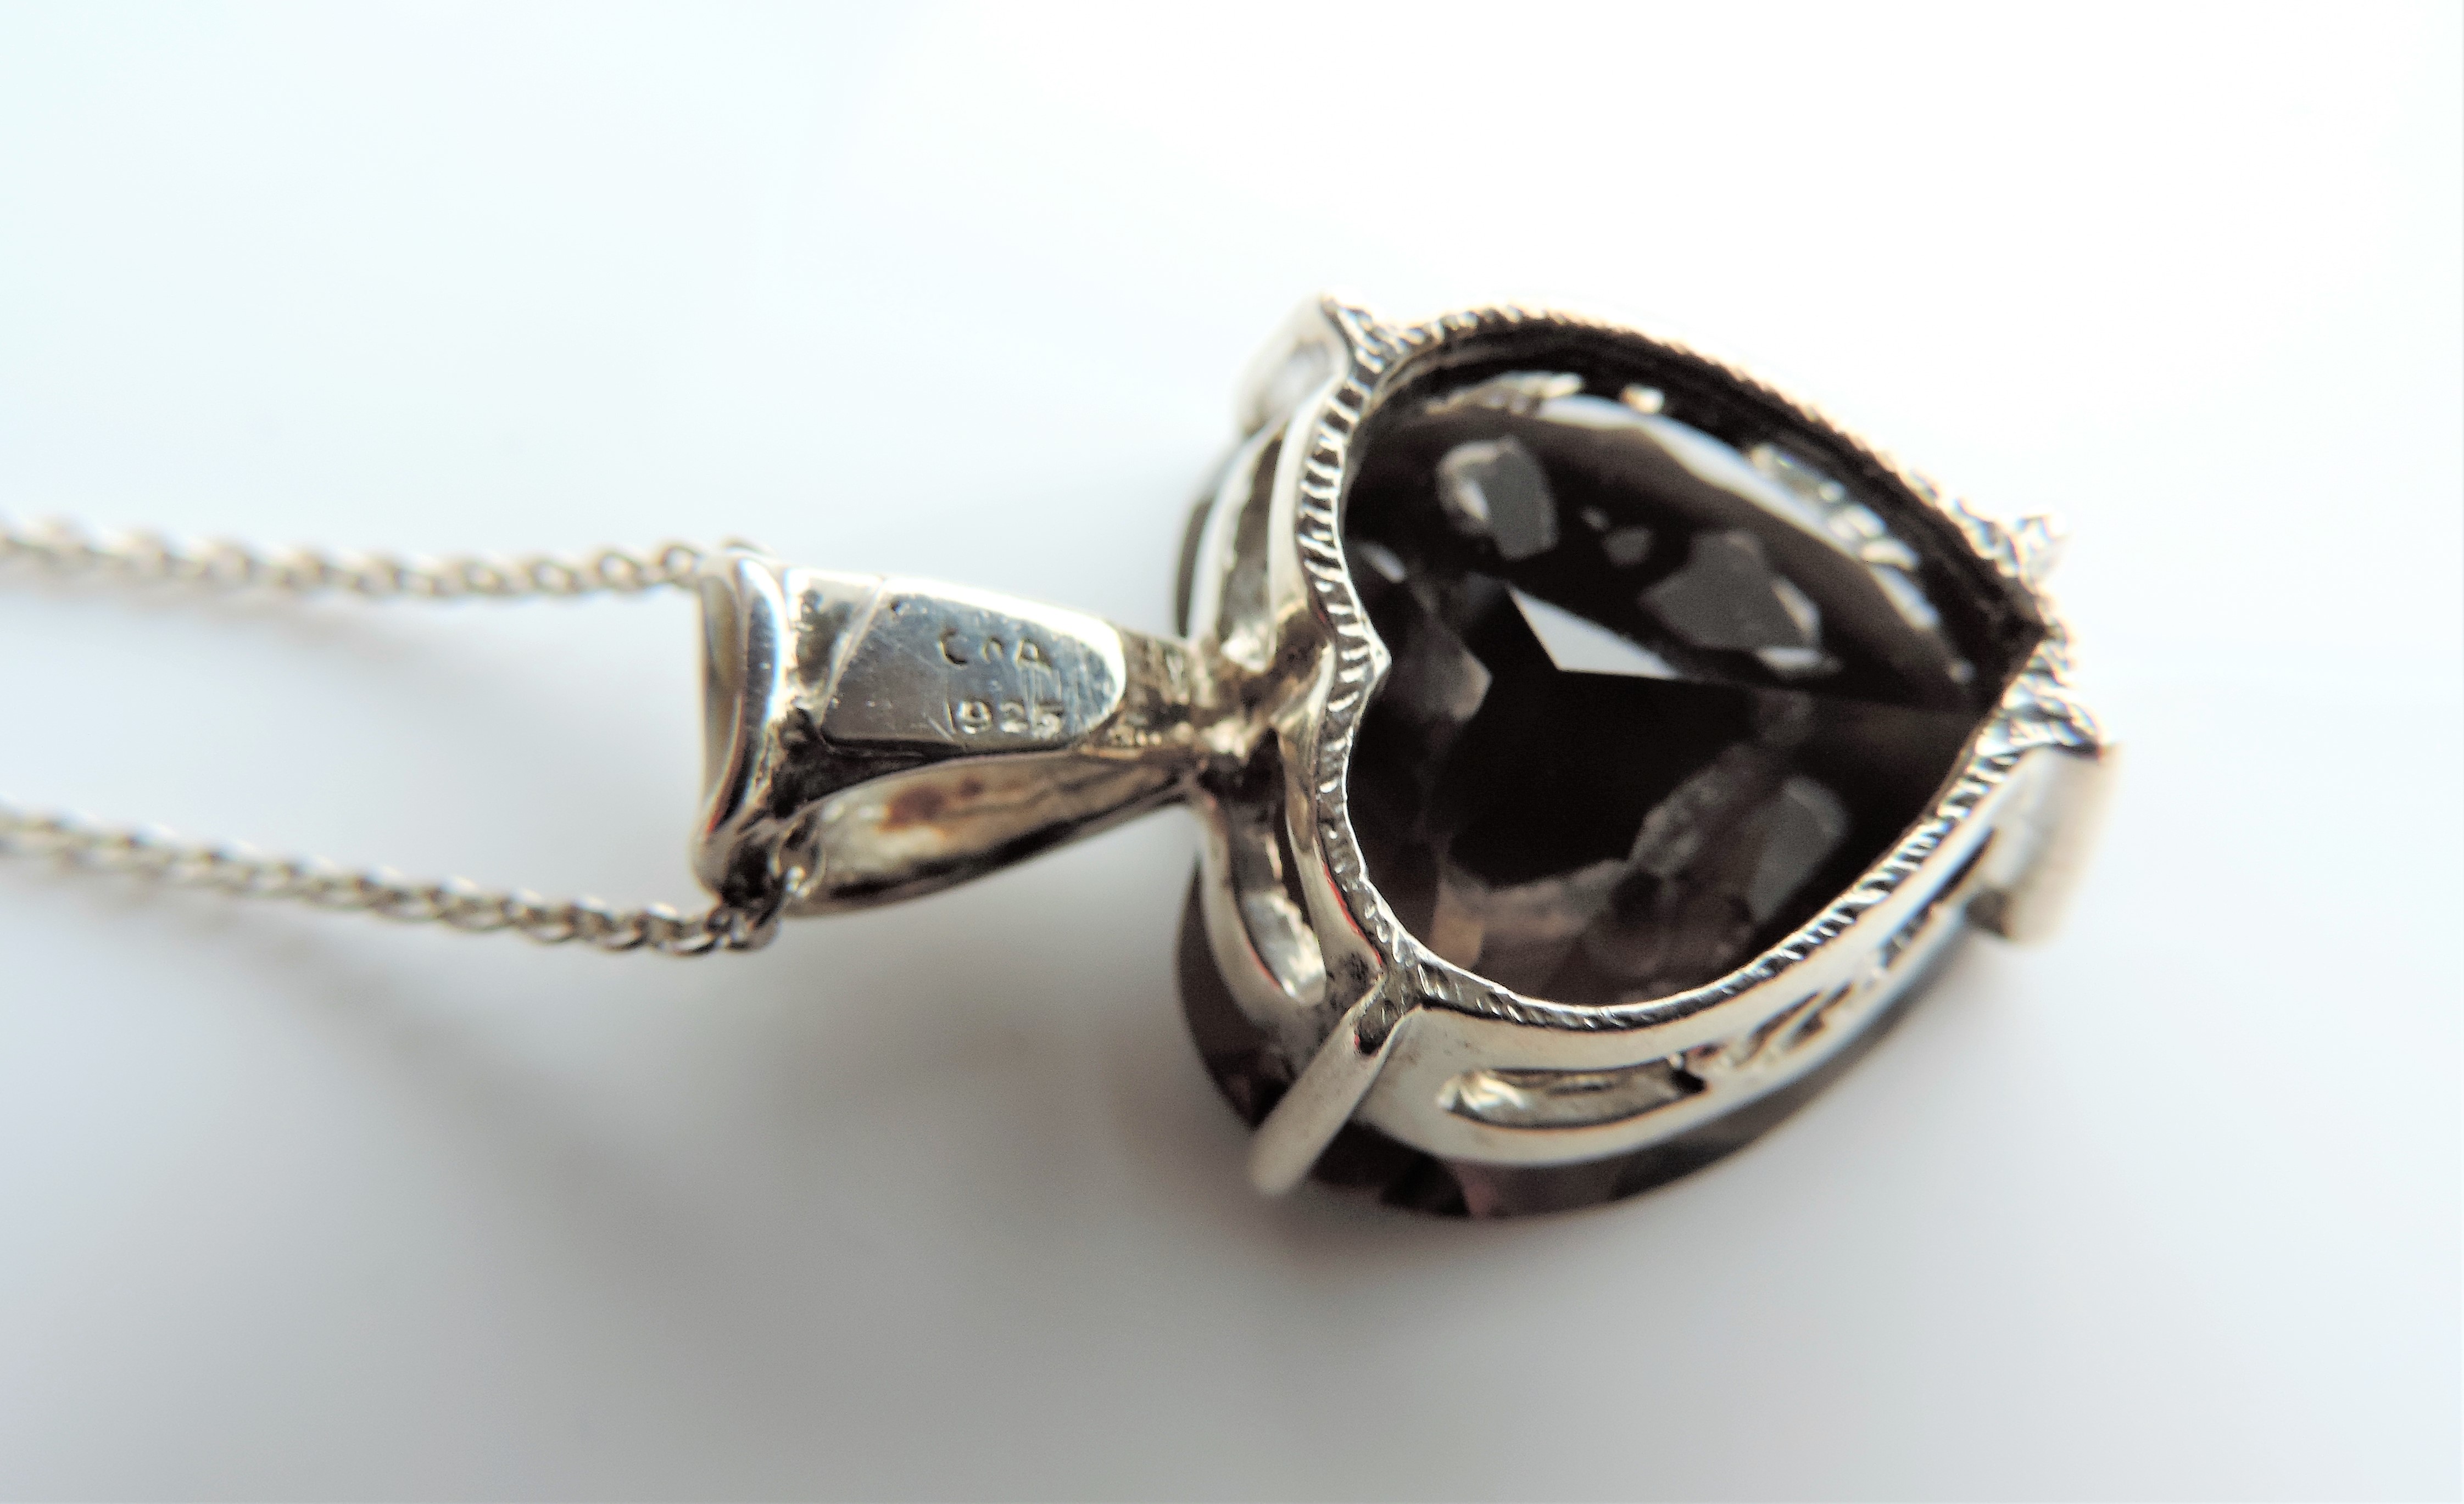 Vintage 15.33 carat Smokey Quartz Pendant Necklace - Image 4 of 4